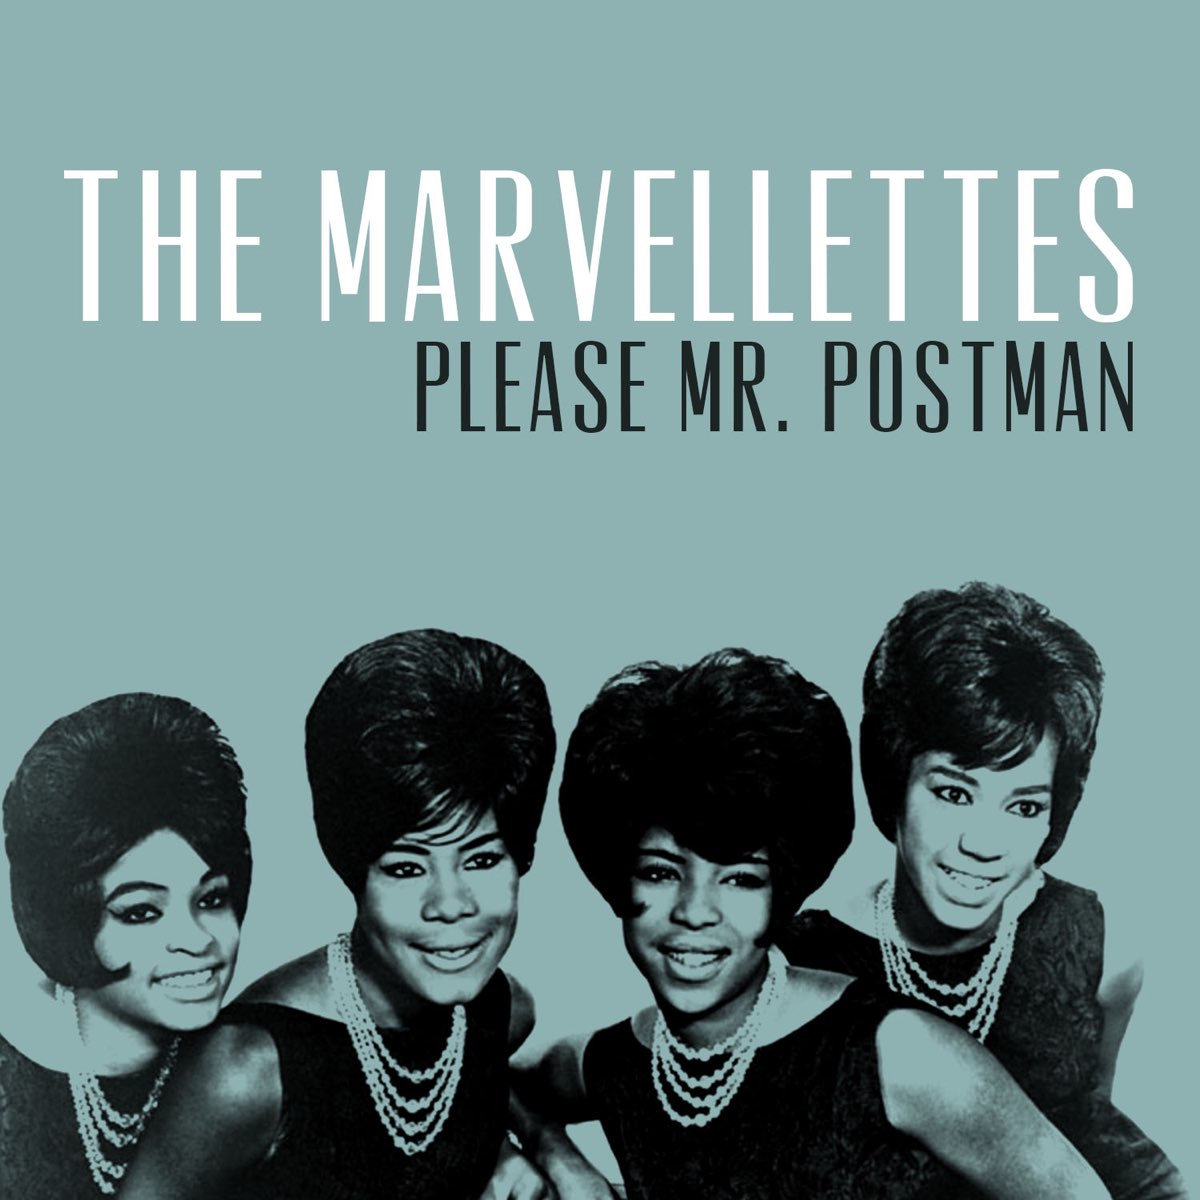 Mr postman. The Marvelettes please Mr. Postman. Please Mr Postman. The Marvelettes - please Mr. Postman 1961 фото. Негритянская девчачья группа 60х с песней please Mister Postman..